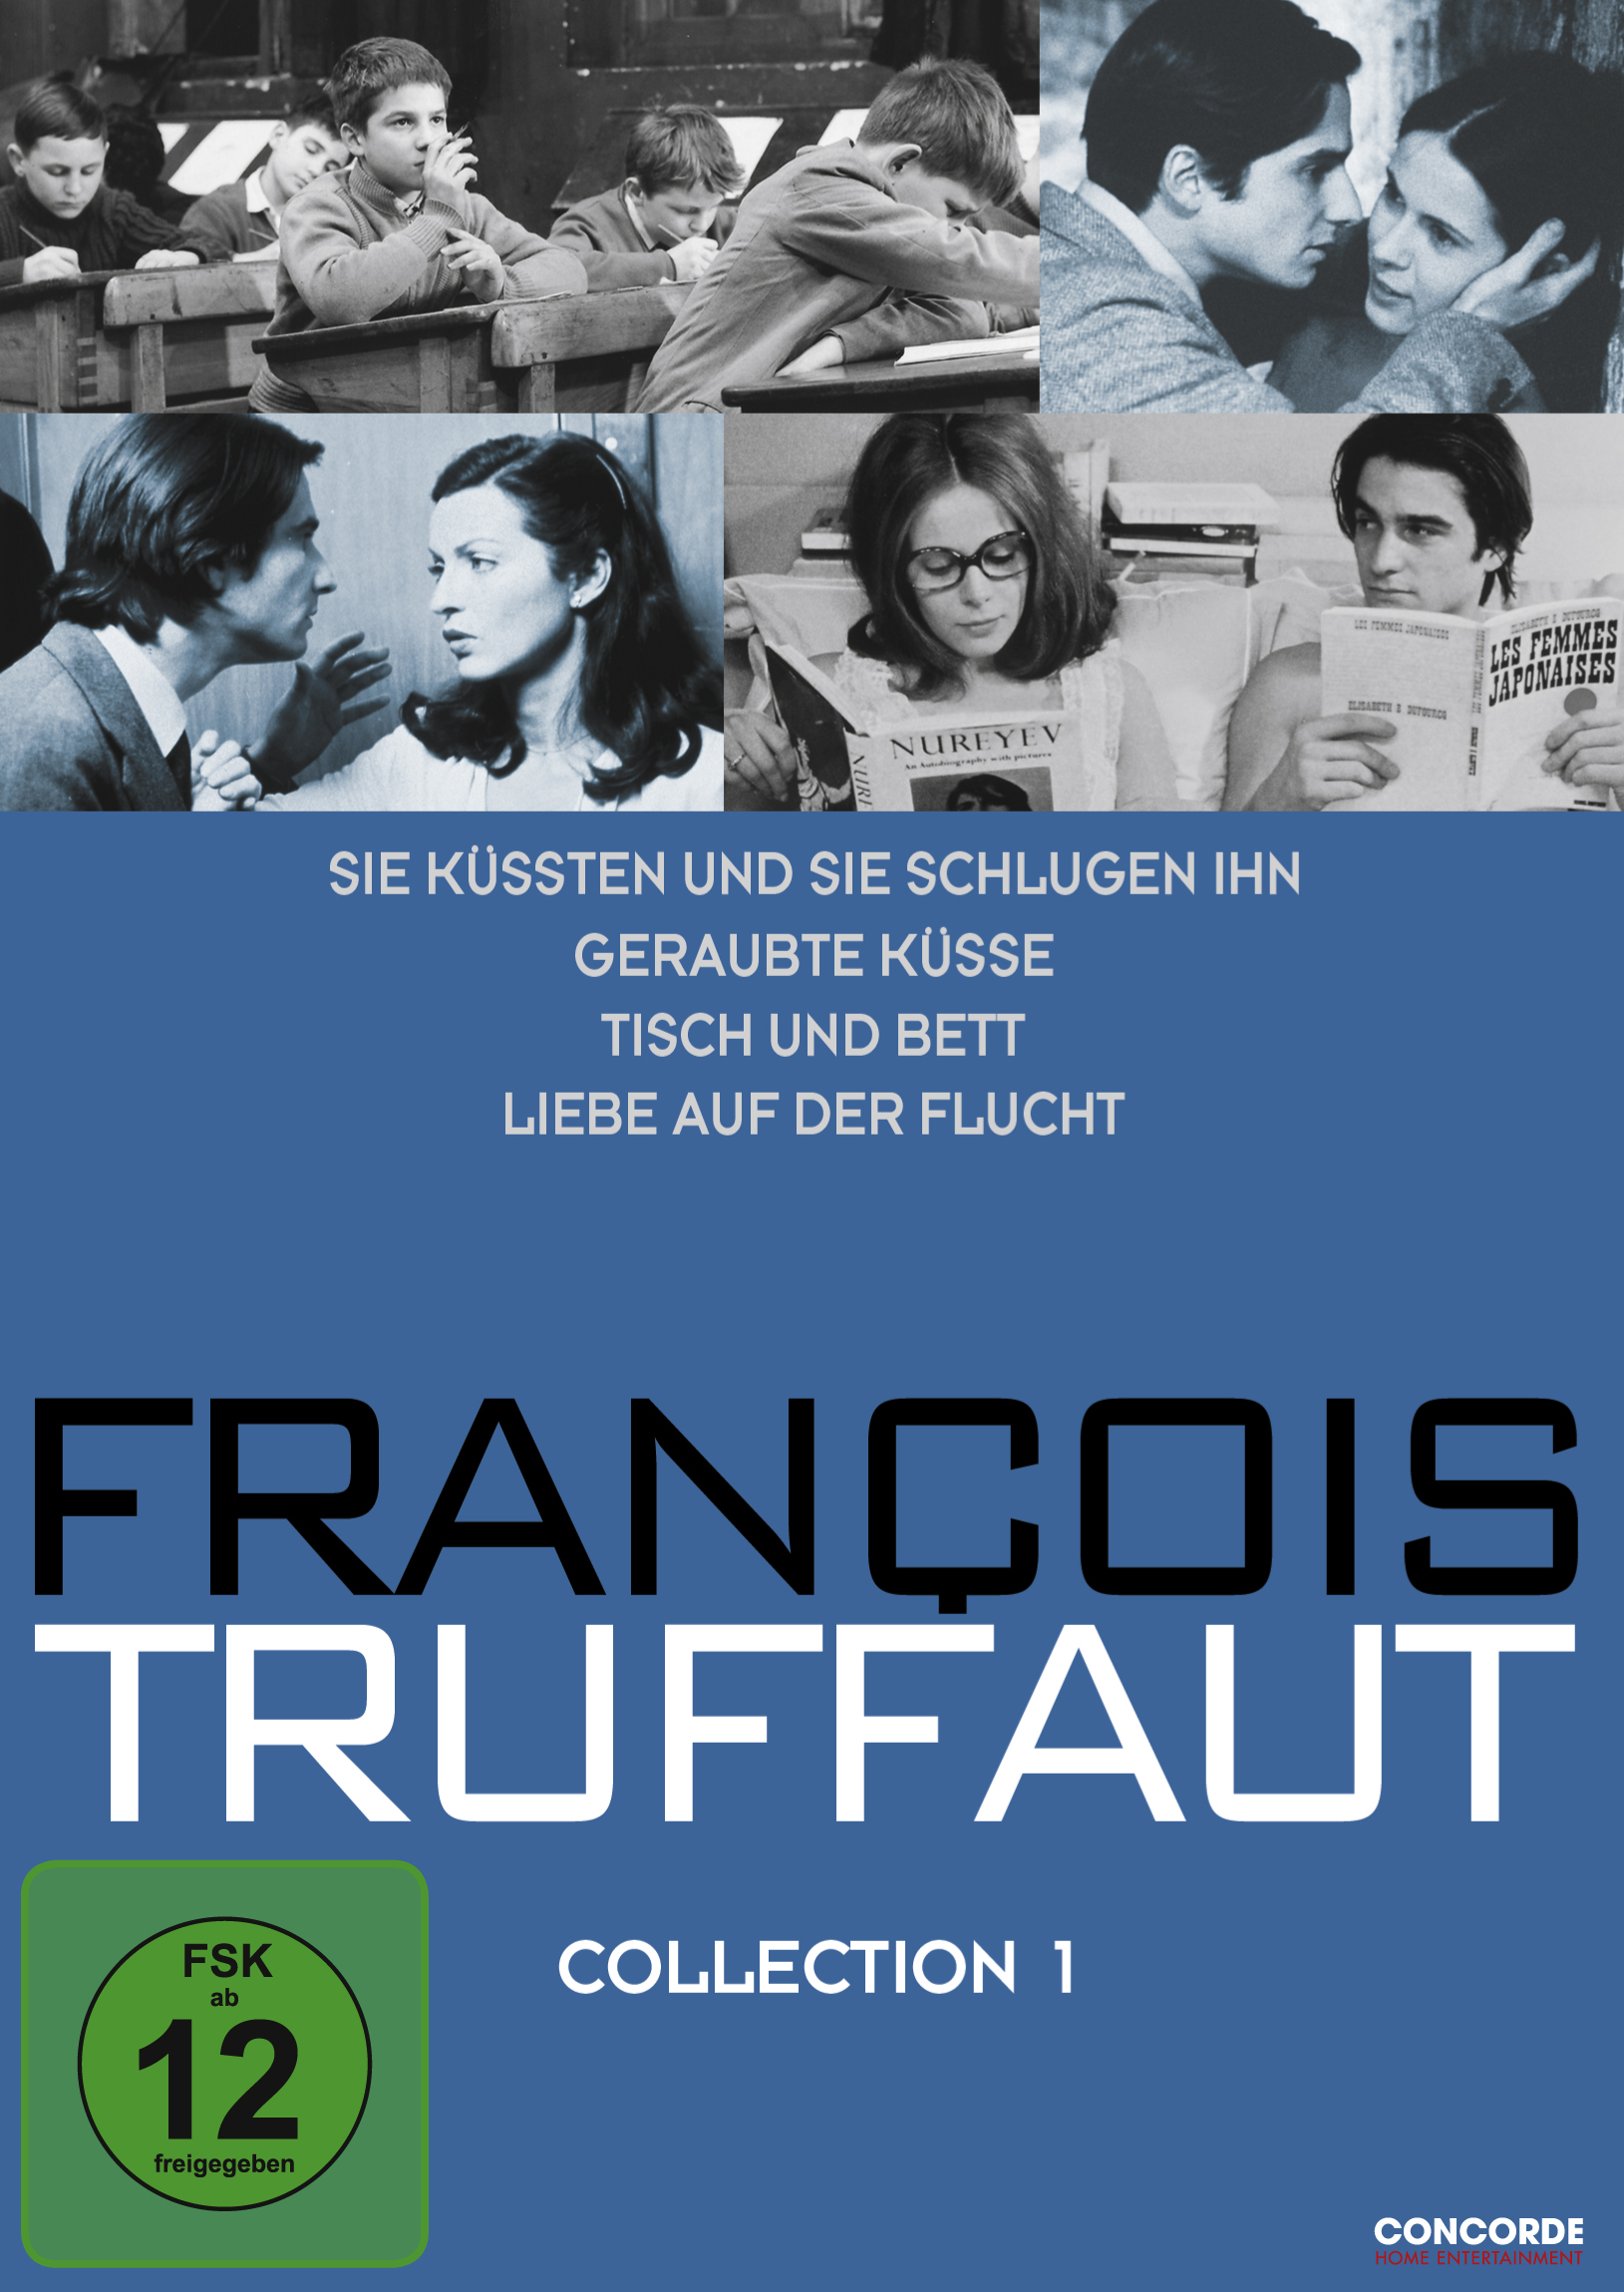 Francois Truffaut Collection 1 DVD